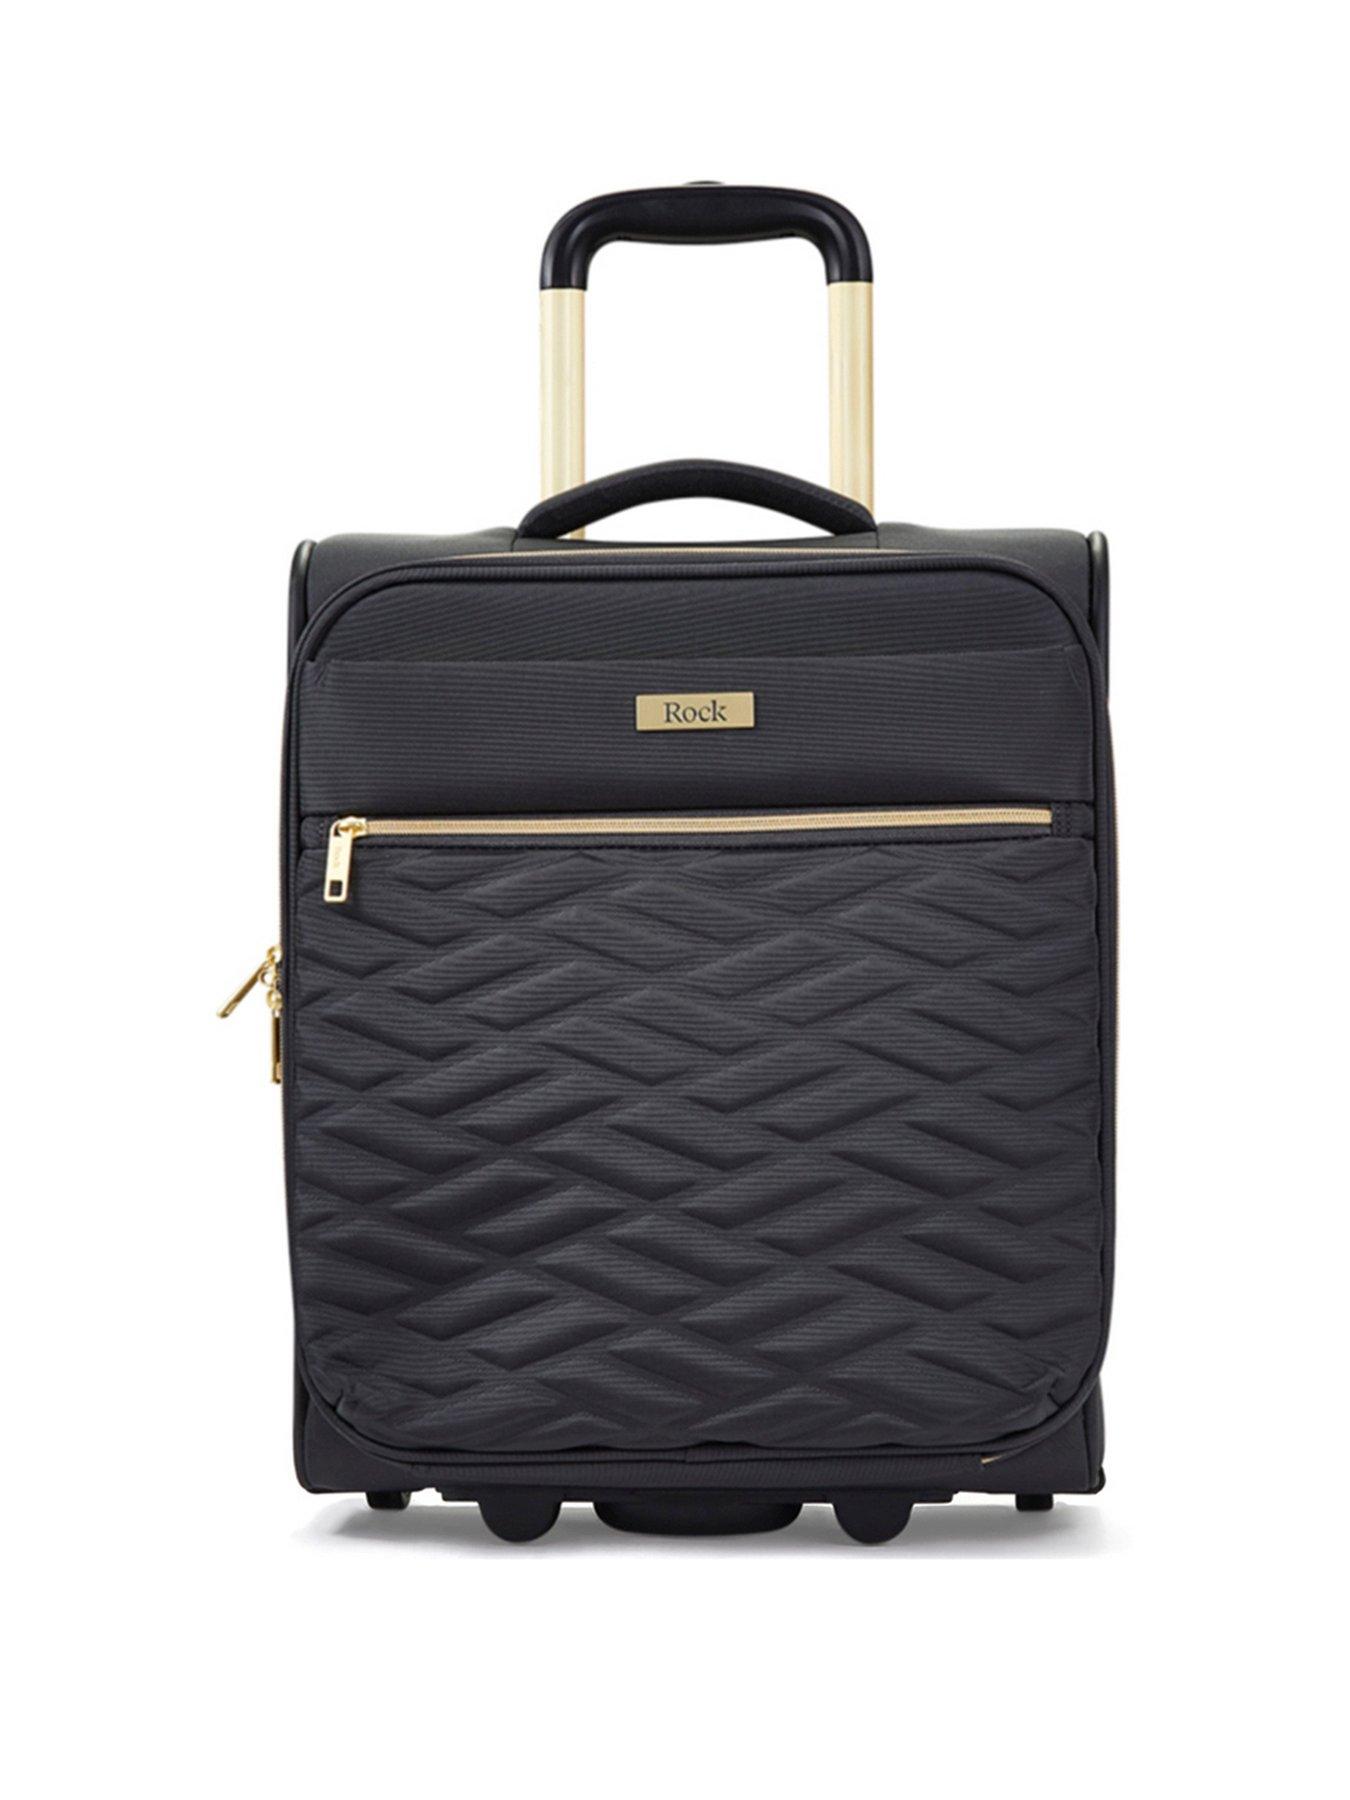 Rock Luggage Sloane Softshell 2 wheel expander with T - Black | very.co.uk